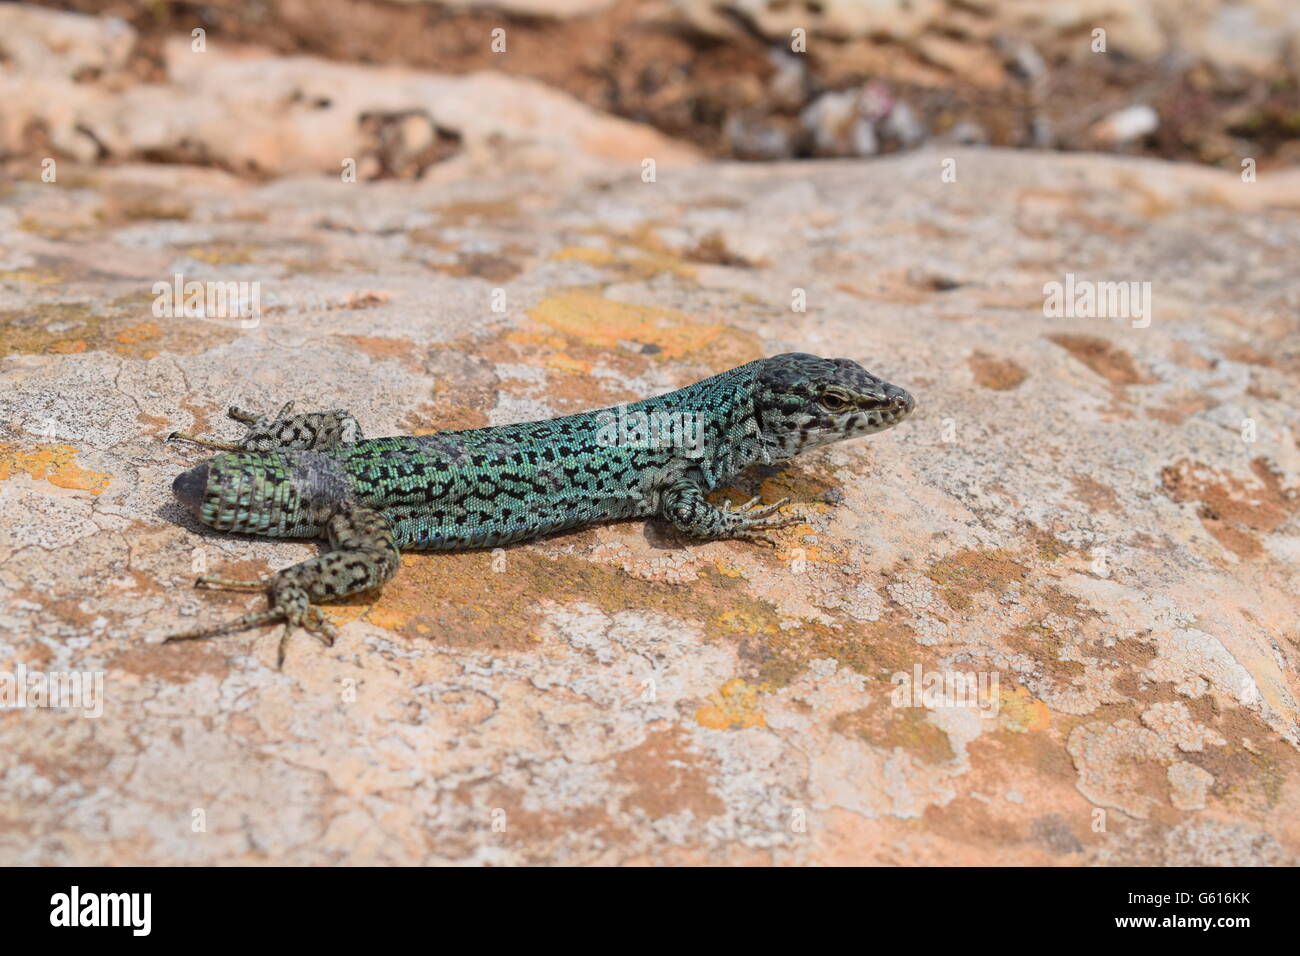 Podarcis Pityusensis Formenterae lizard resting on stone without tail Stock Photo